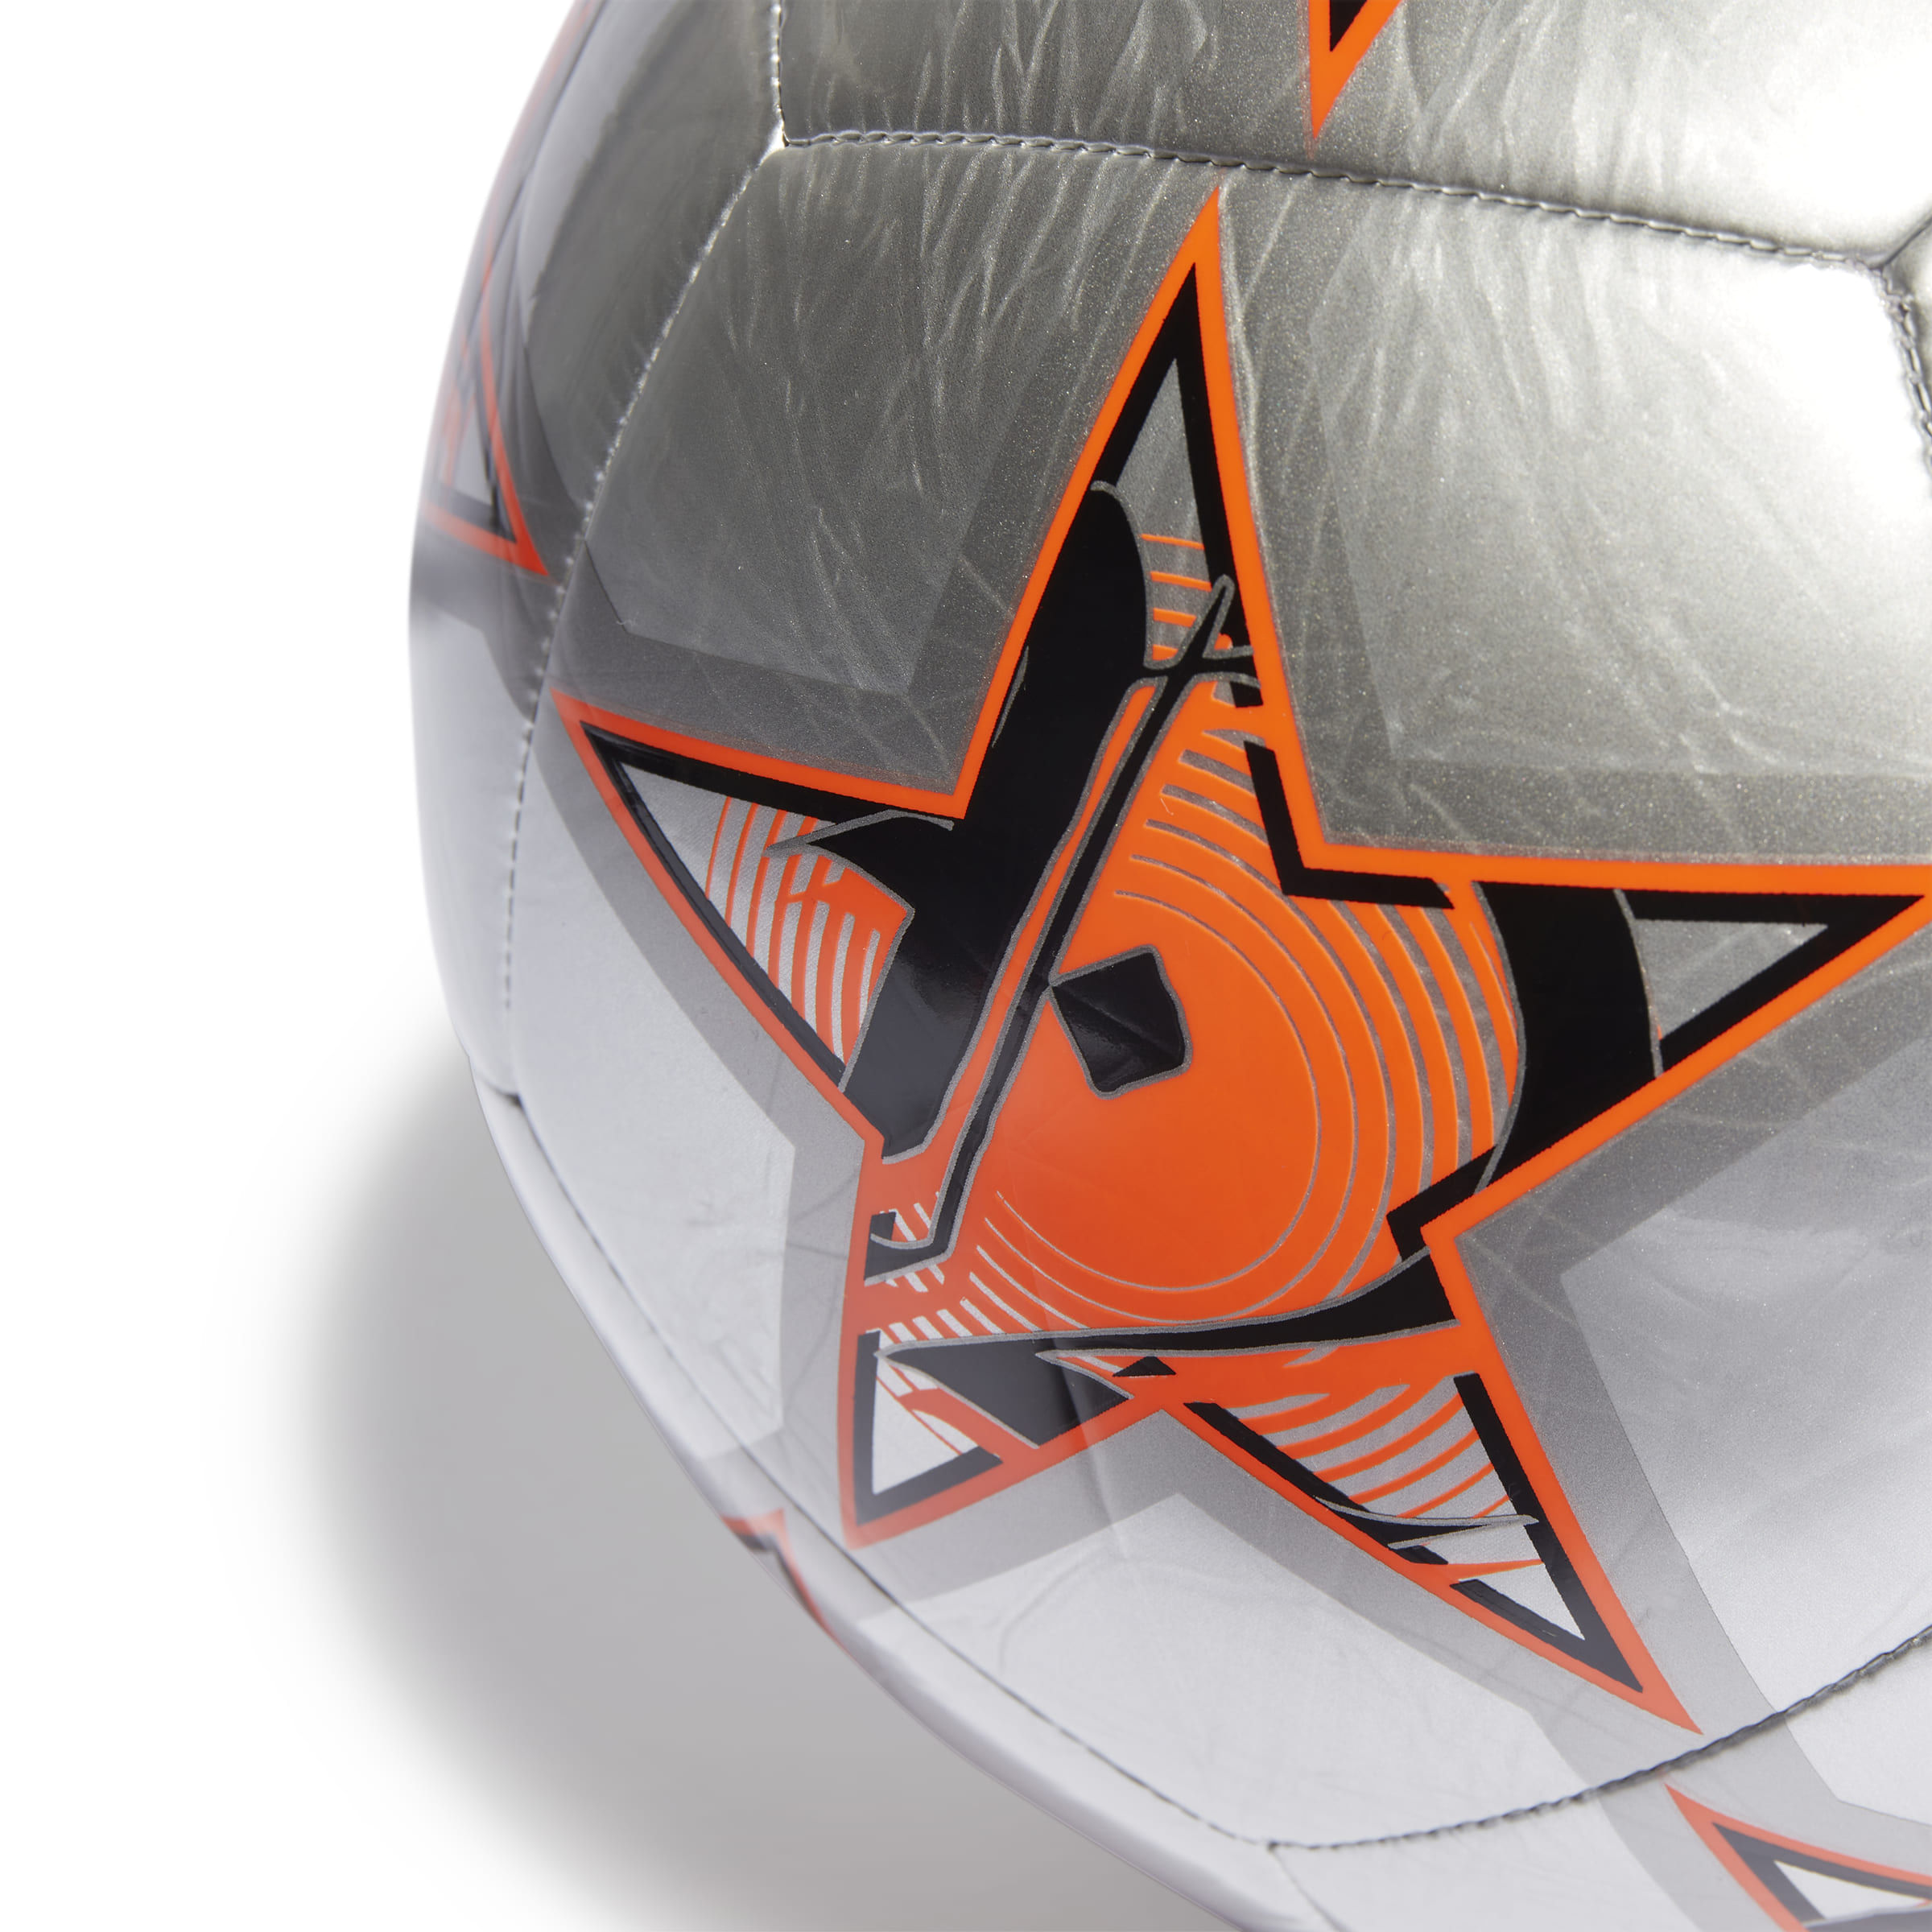 Accesorios Deporte Futbol Balon Adidas Ucl trn champions plata ia0955